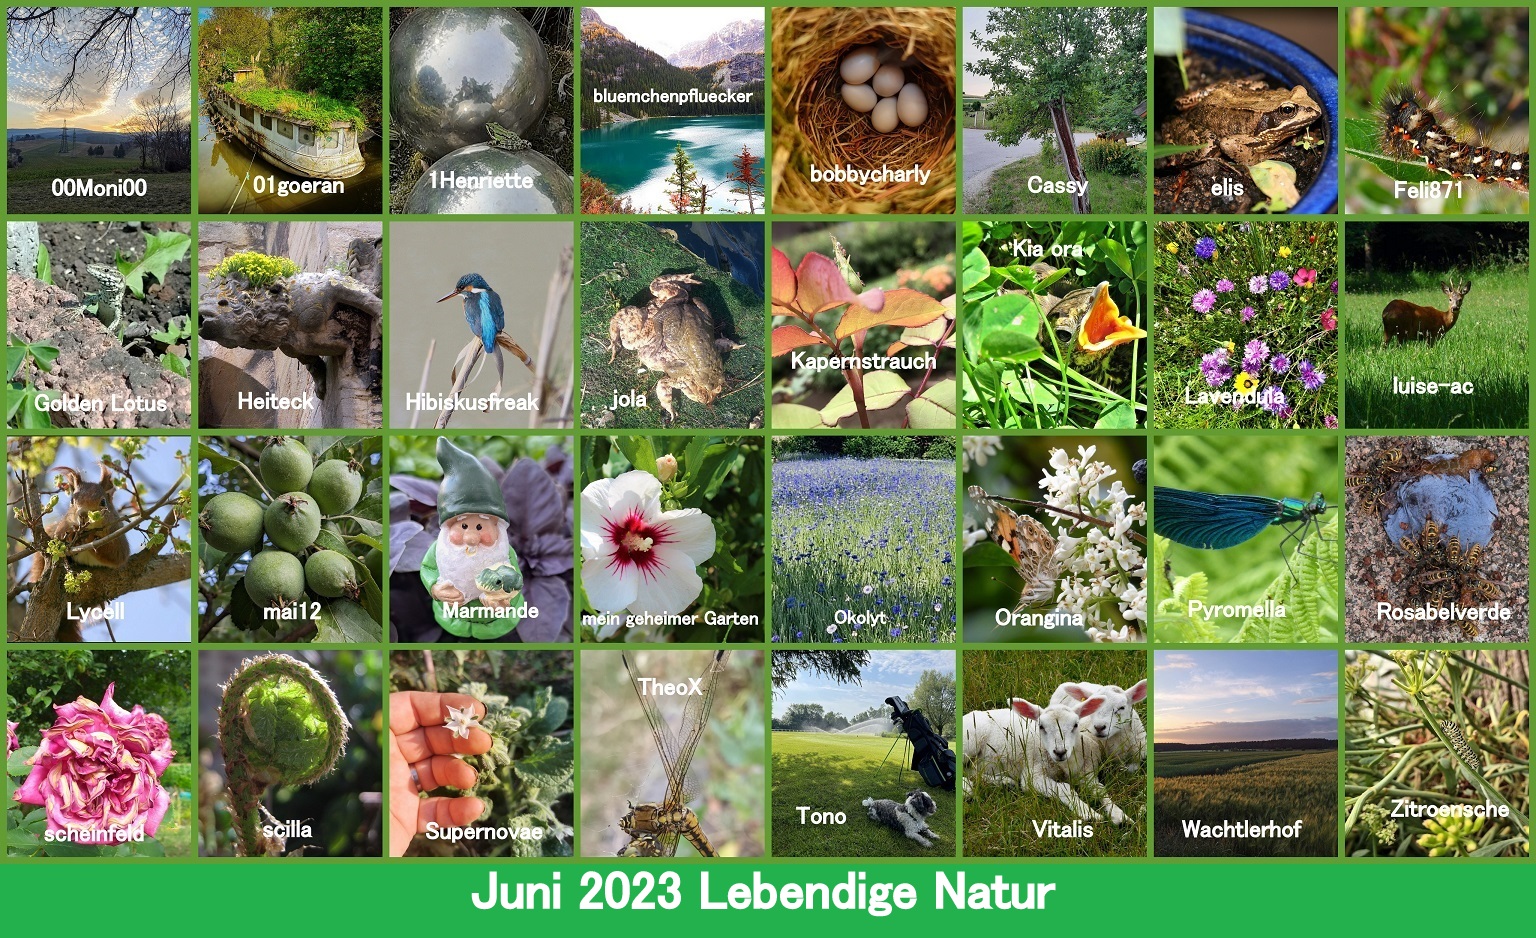 ___________________H&G Juni 2023 Lebendige Natur - Copy.jpg